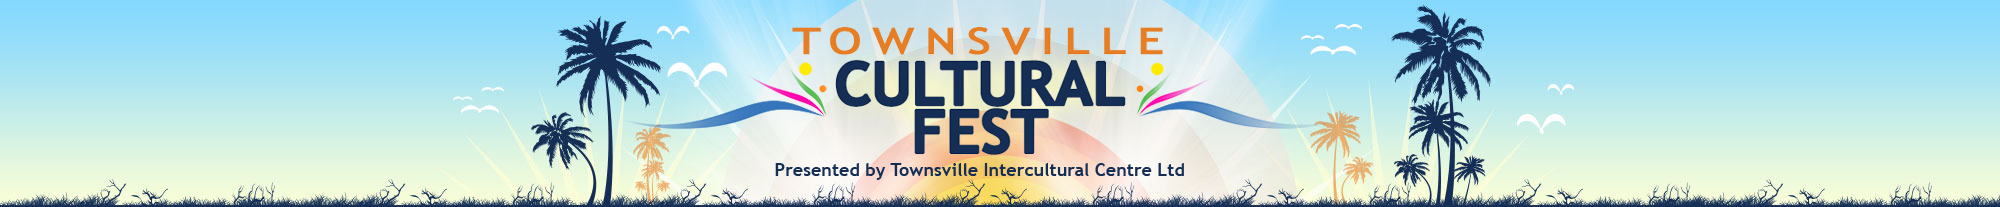 Townsville Cultural Festival